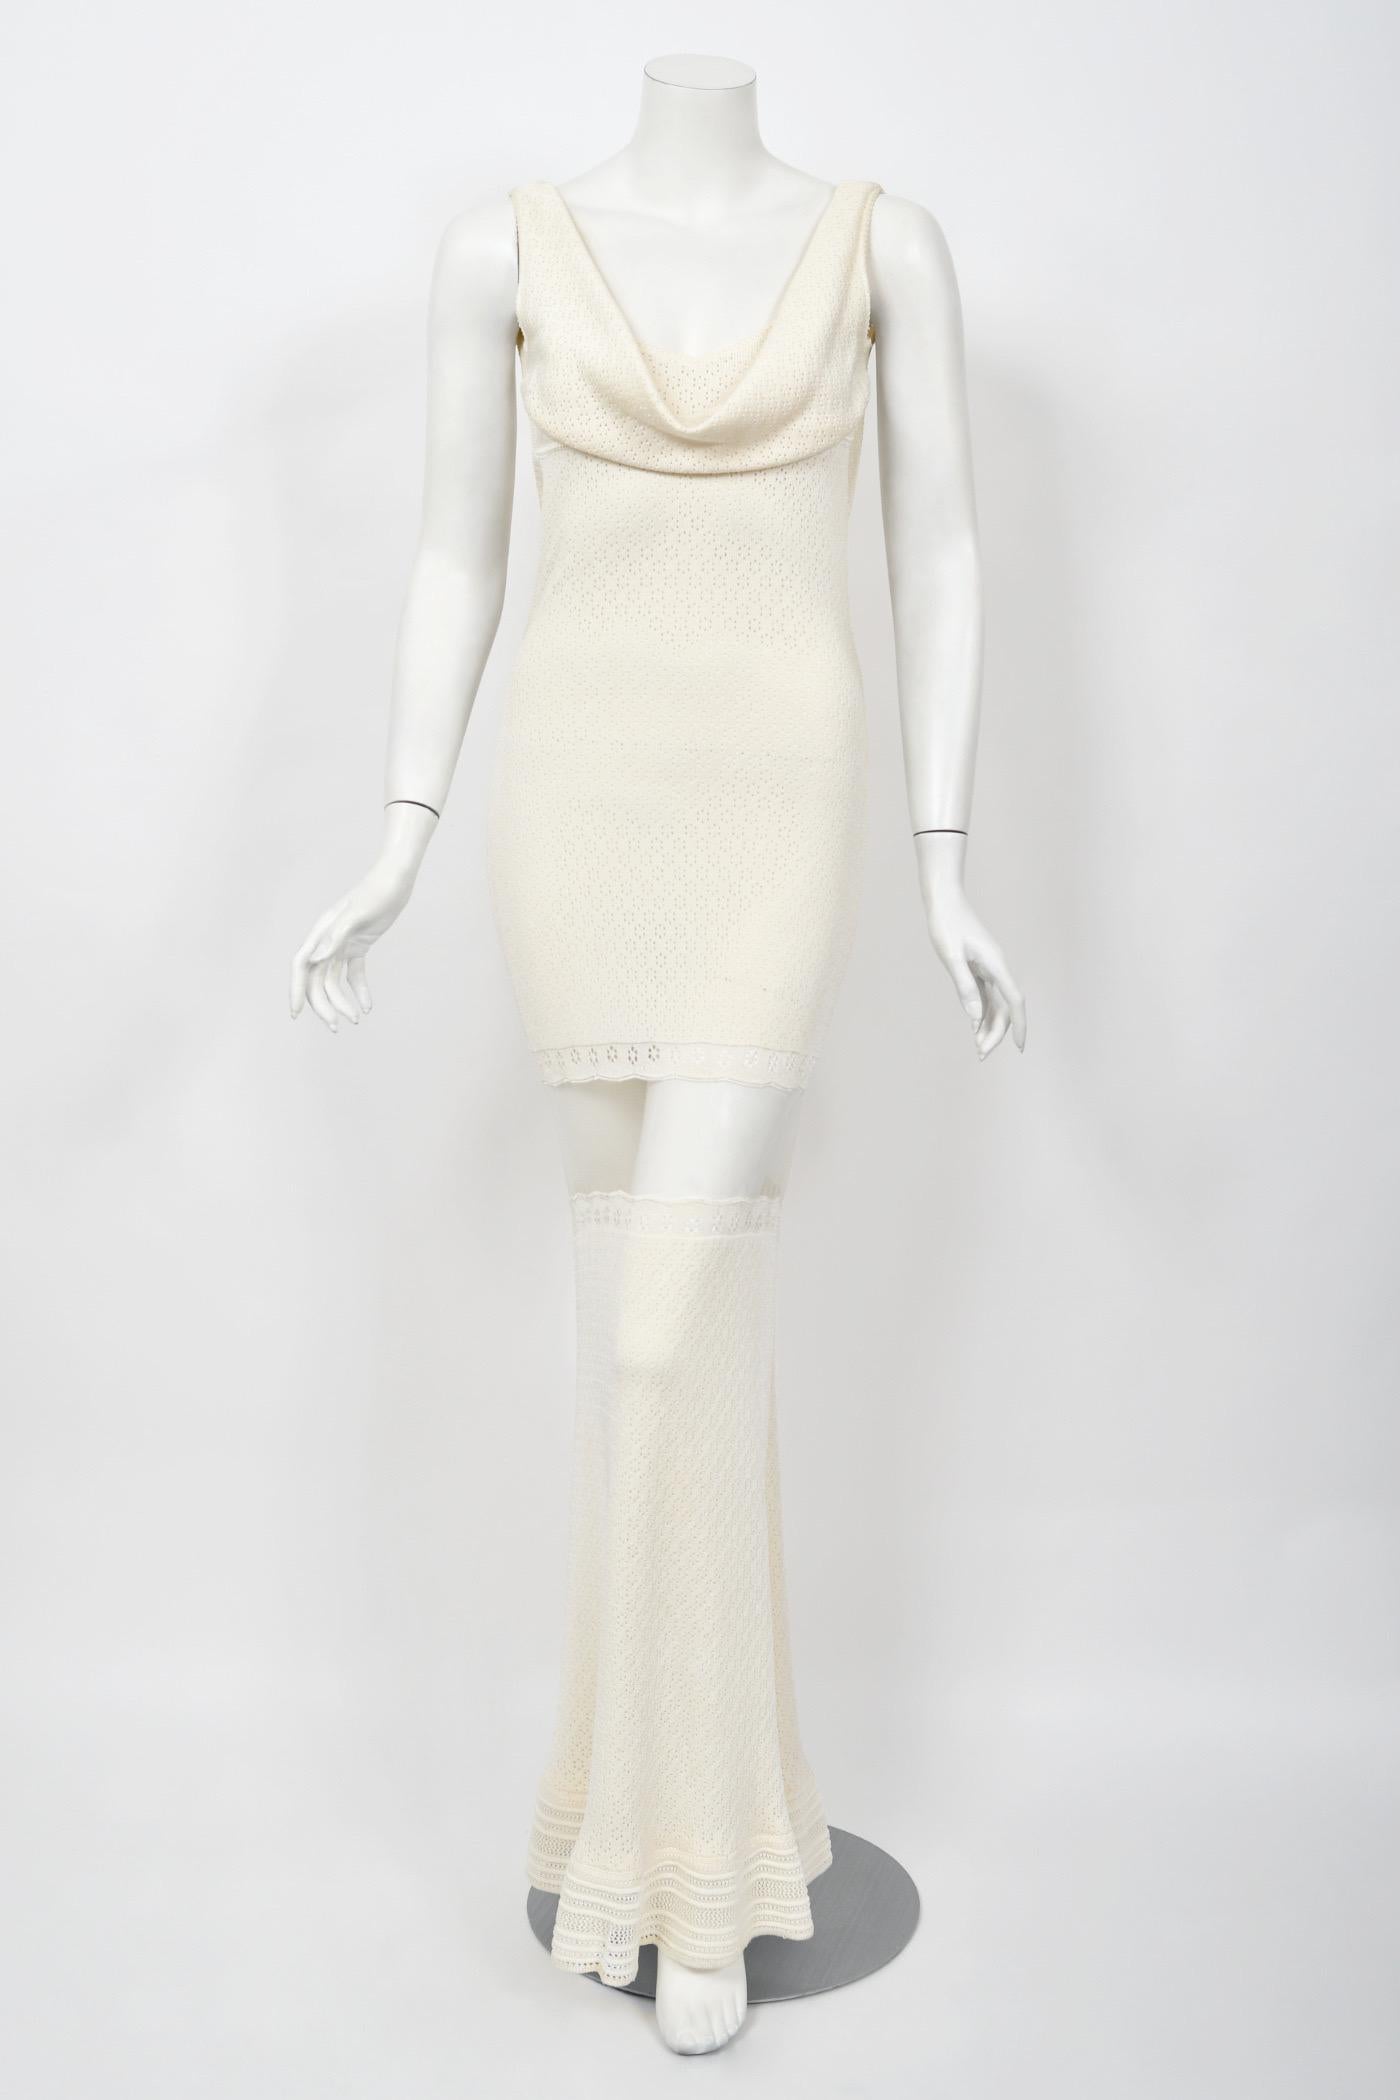 1998 John Galliano Runway Ivory Stretch Knit Sheer Bias-Cut Backless Bridal Gown 3